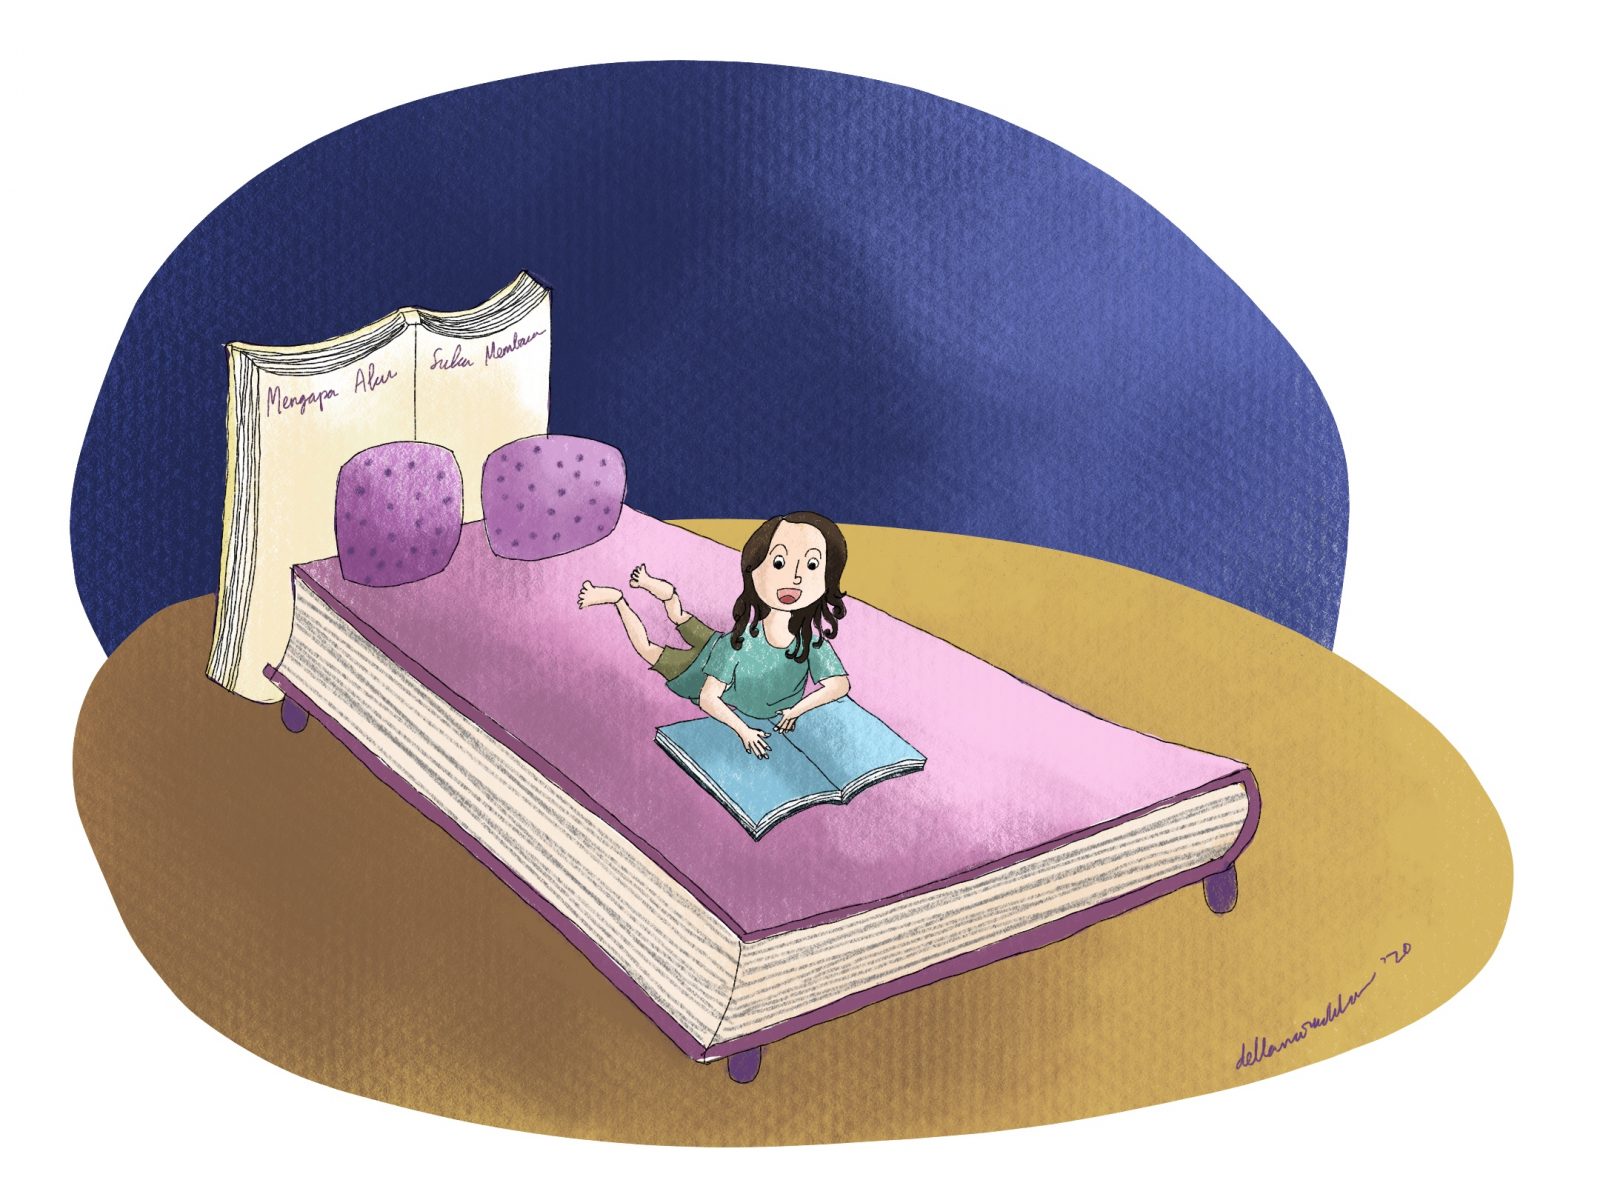 Ilustrasi: Mengapa Aku Suka Membaca? karya Della Naradika